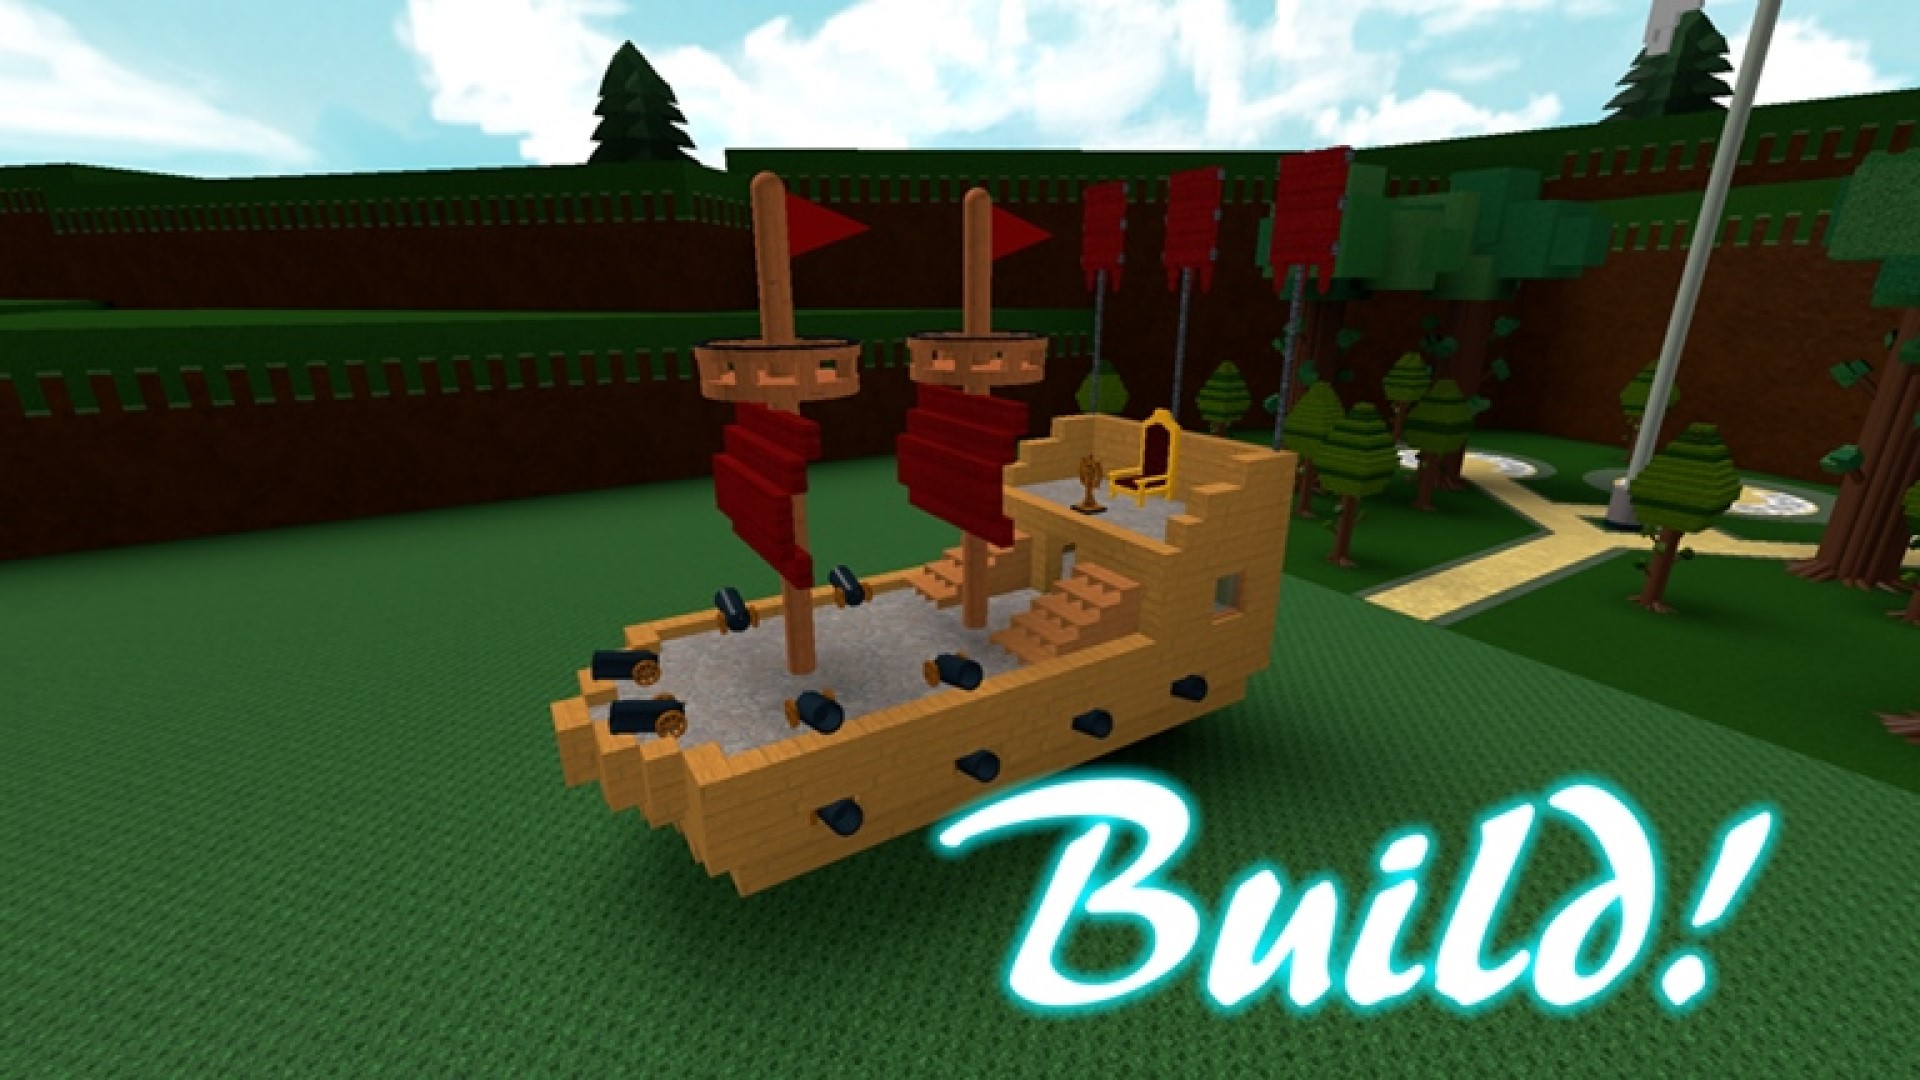 Best Roblox Games - Costruisci una barca per Treasure Boat con la parola